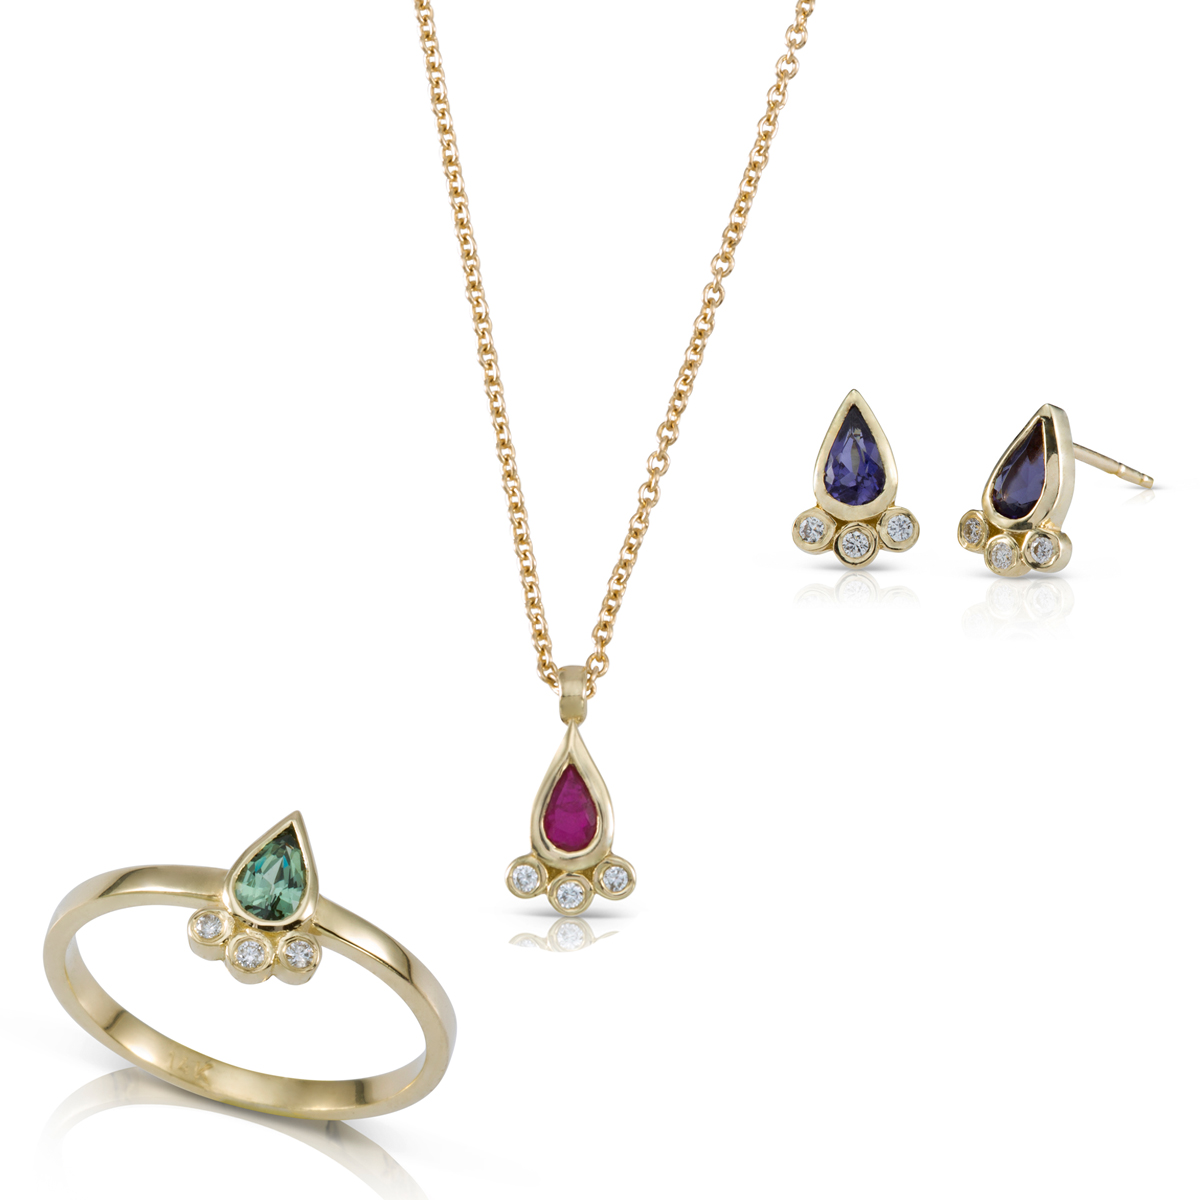 Colored gemstone and diamonds gold jewelry set